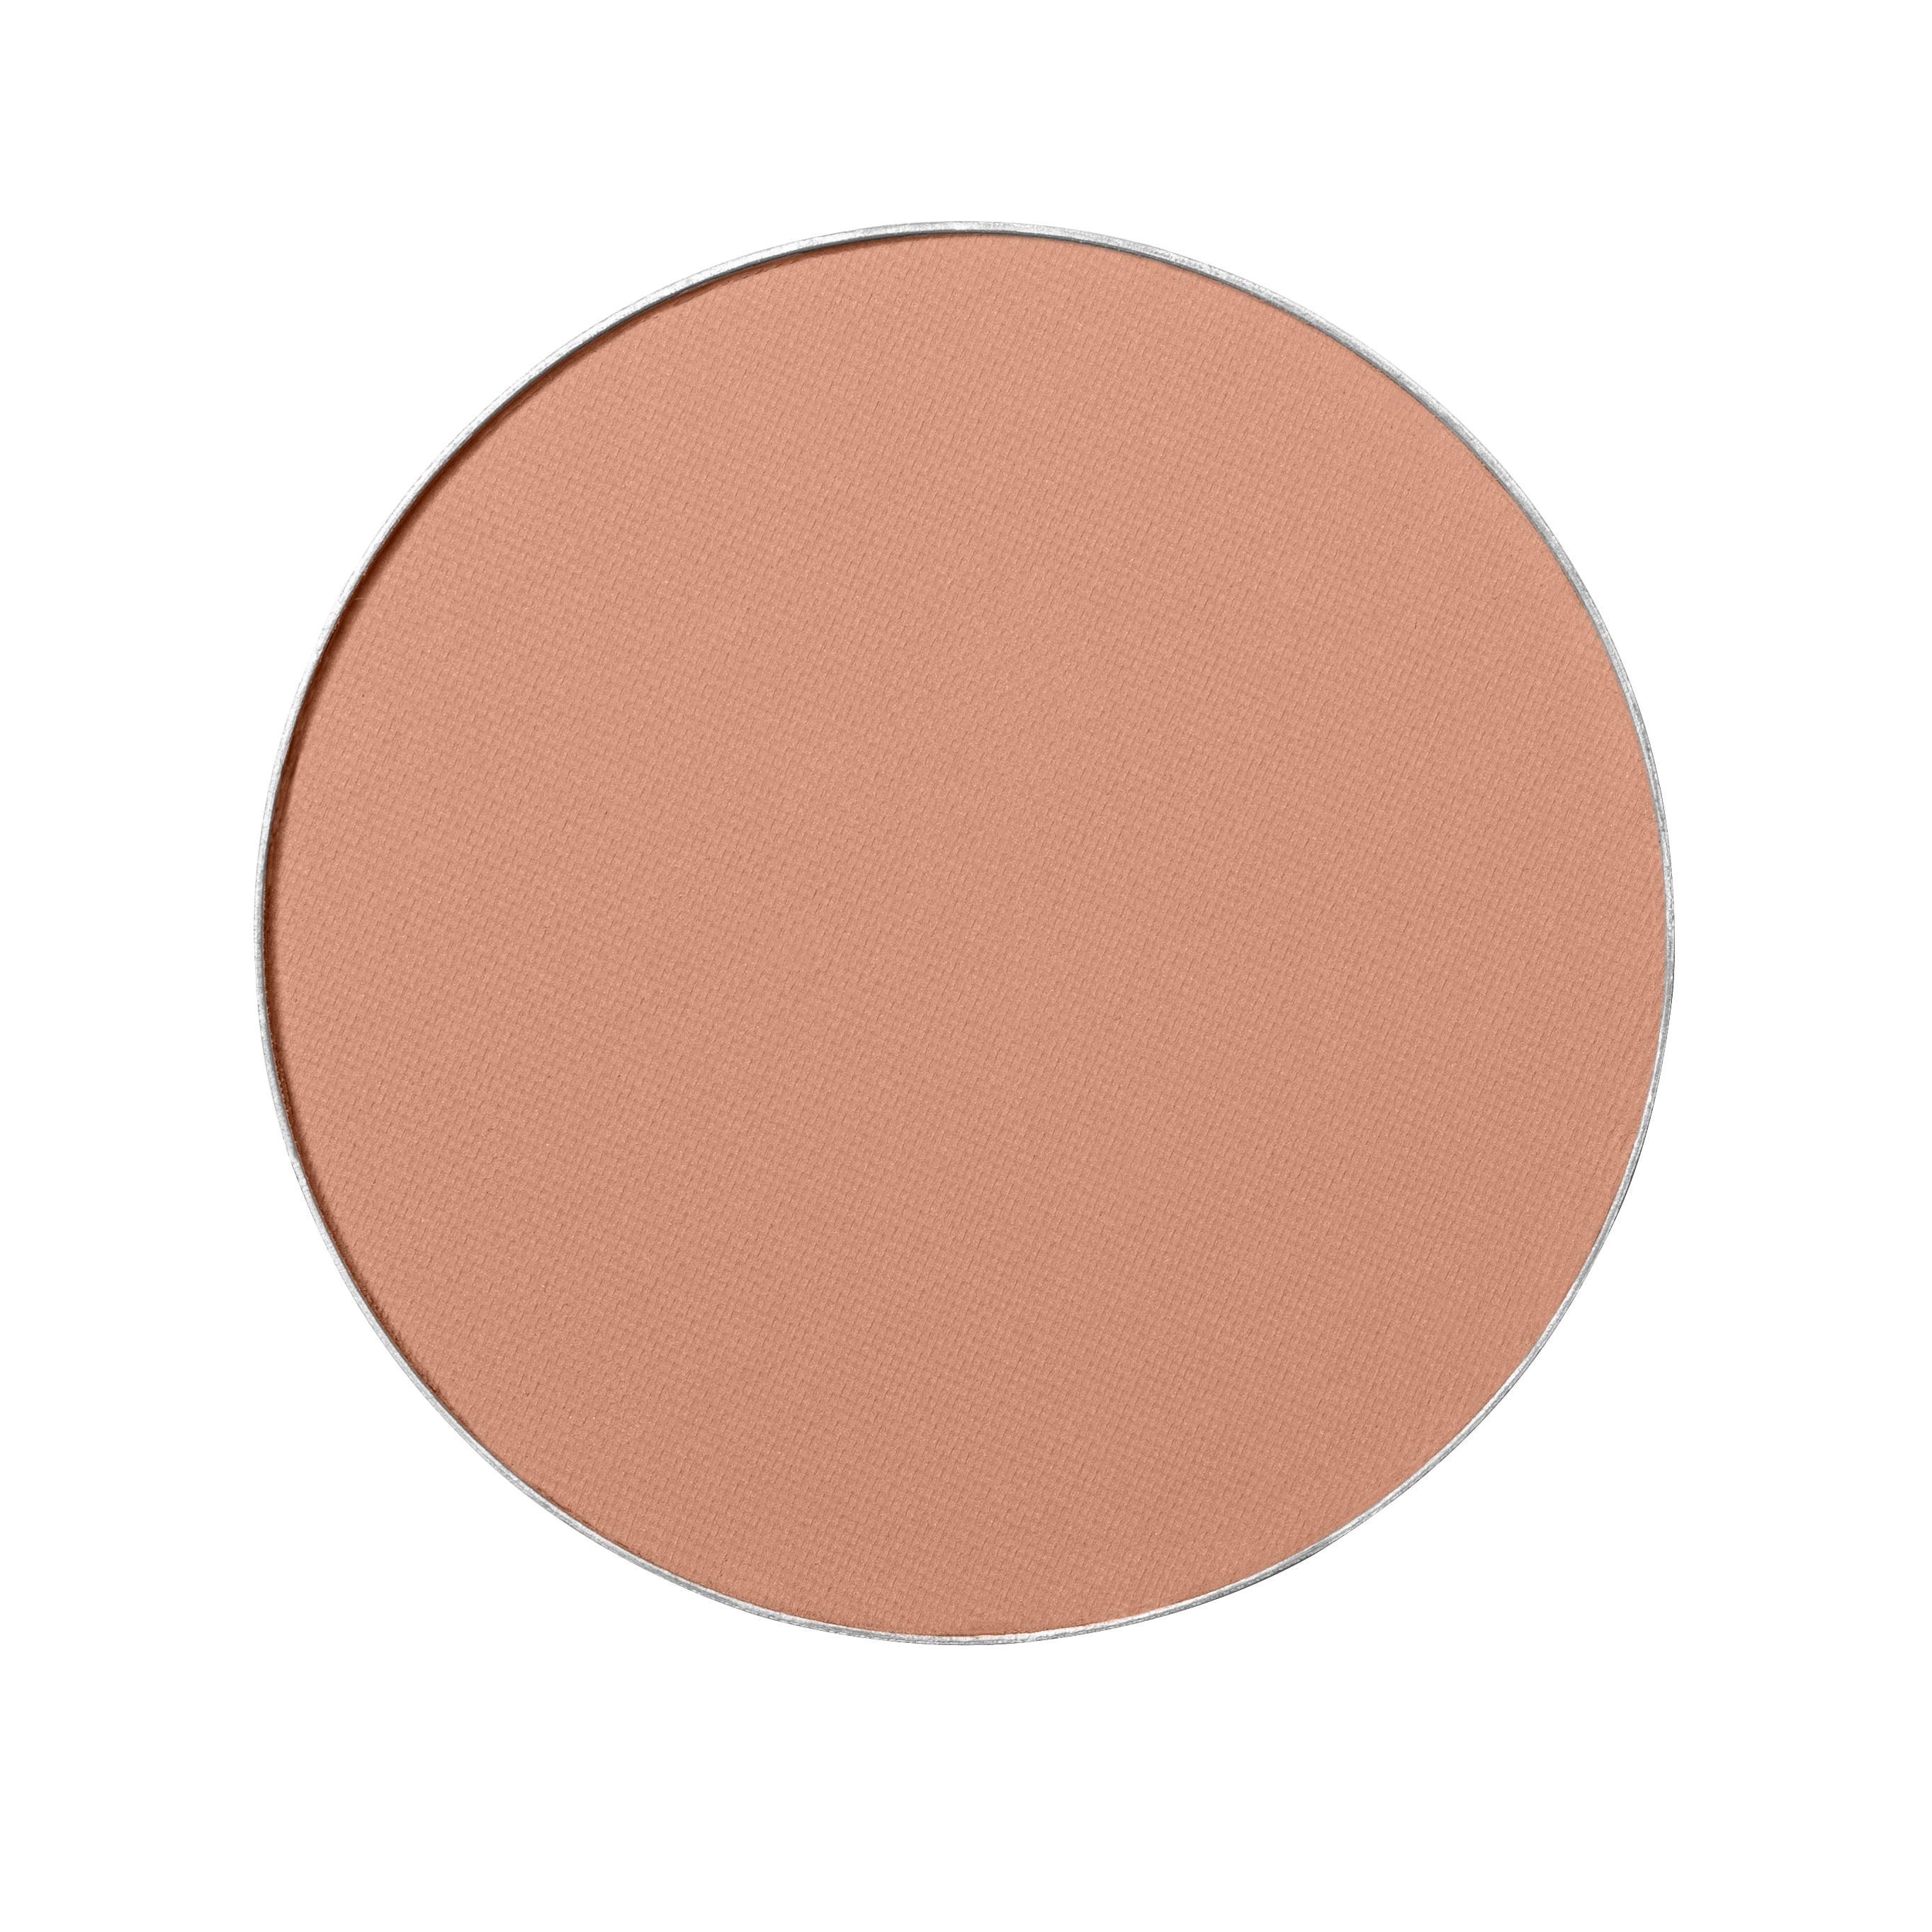 Shiseido Sun - uv protective compact foundation spf30 refill dark beige